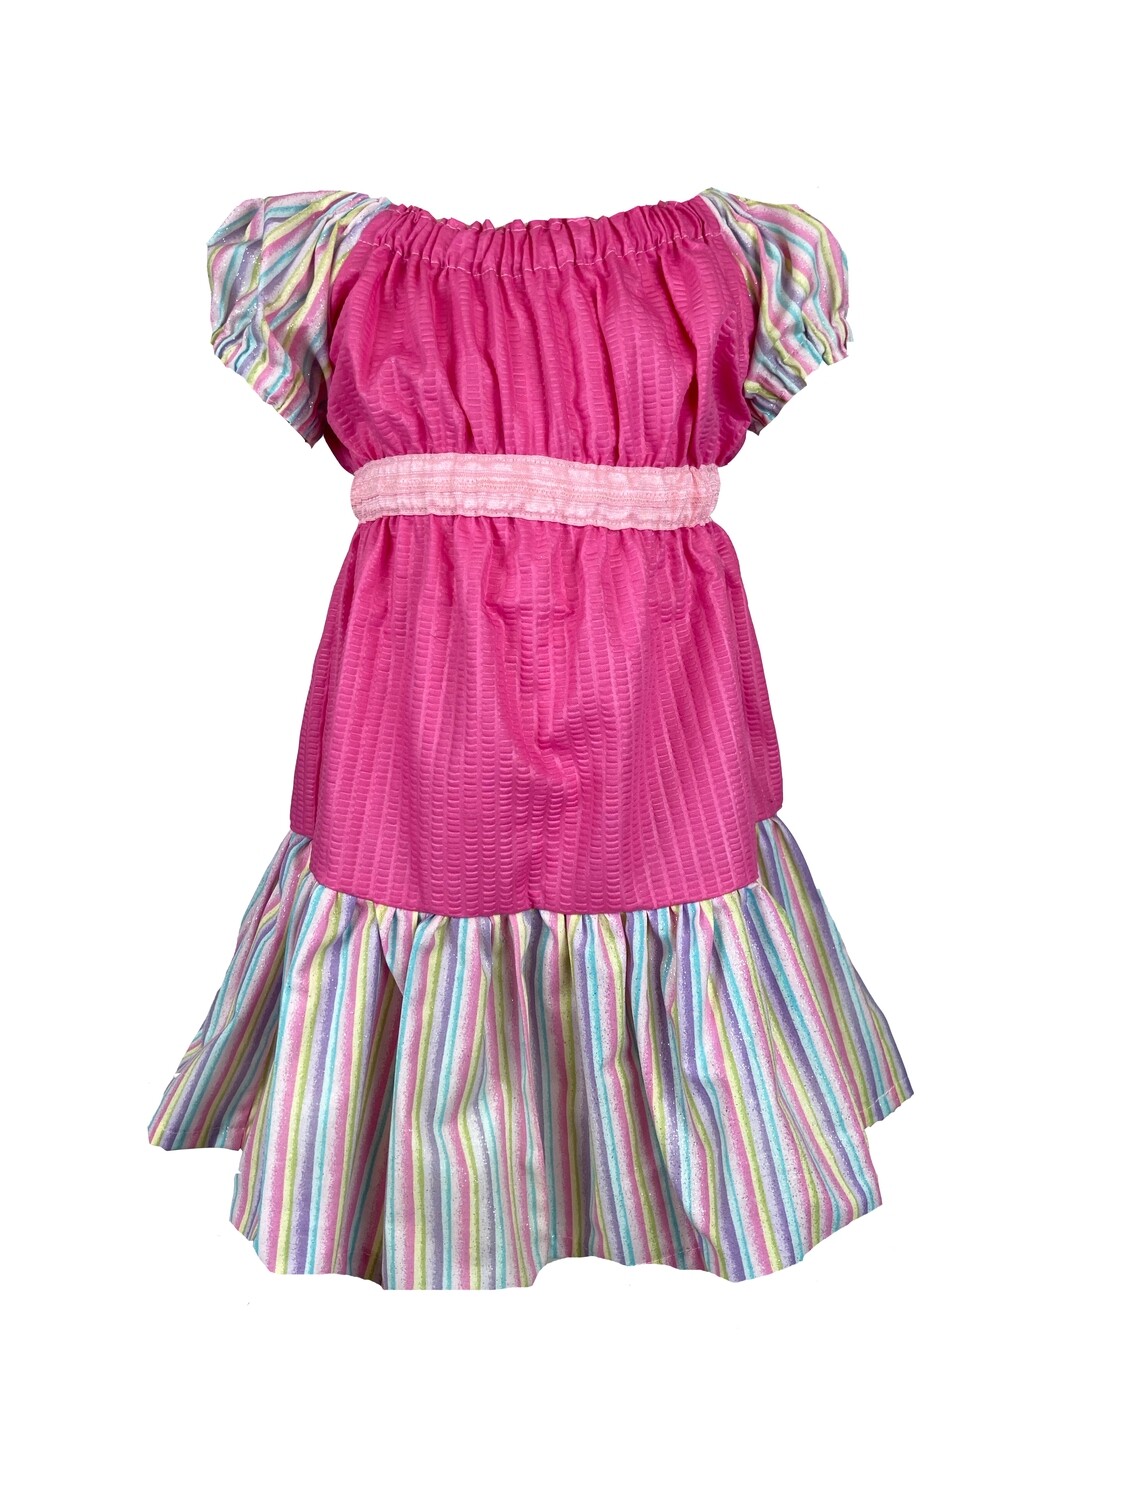 Rainbow Spring Dress (Size 2T)